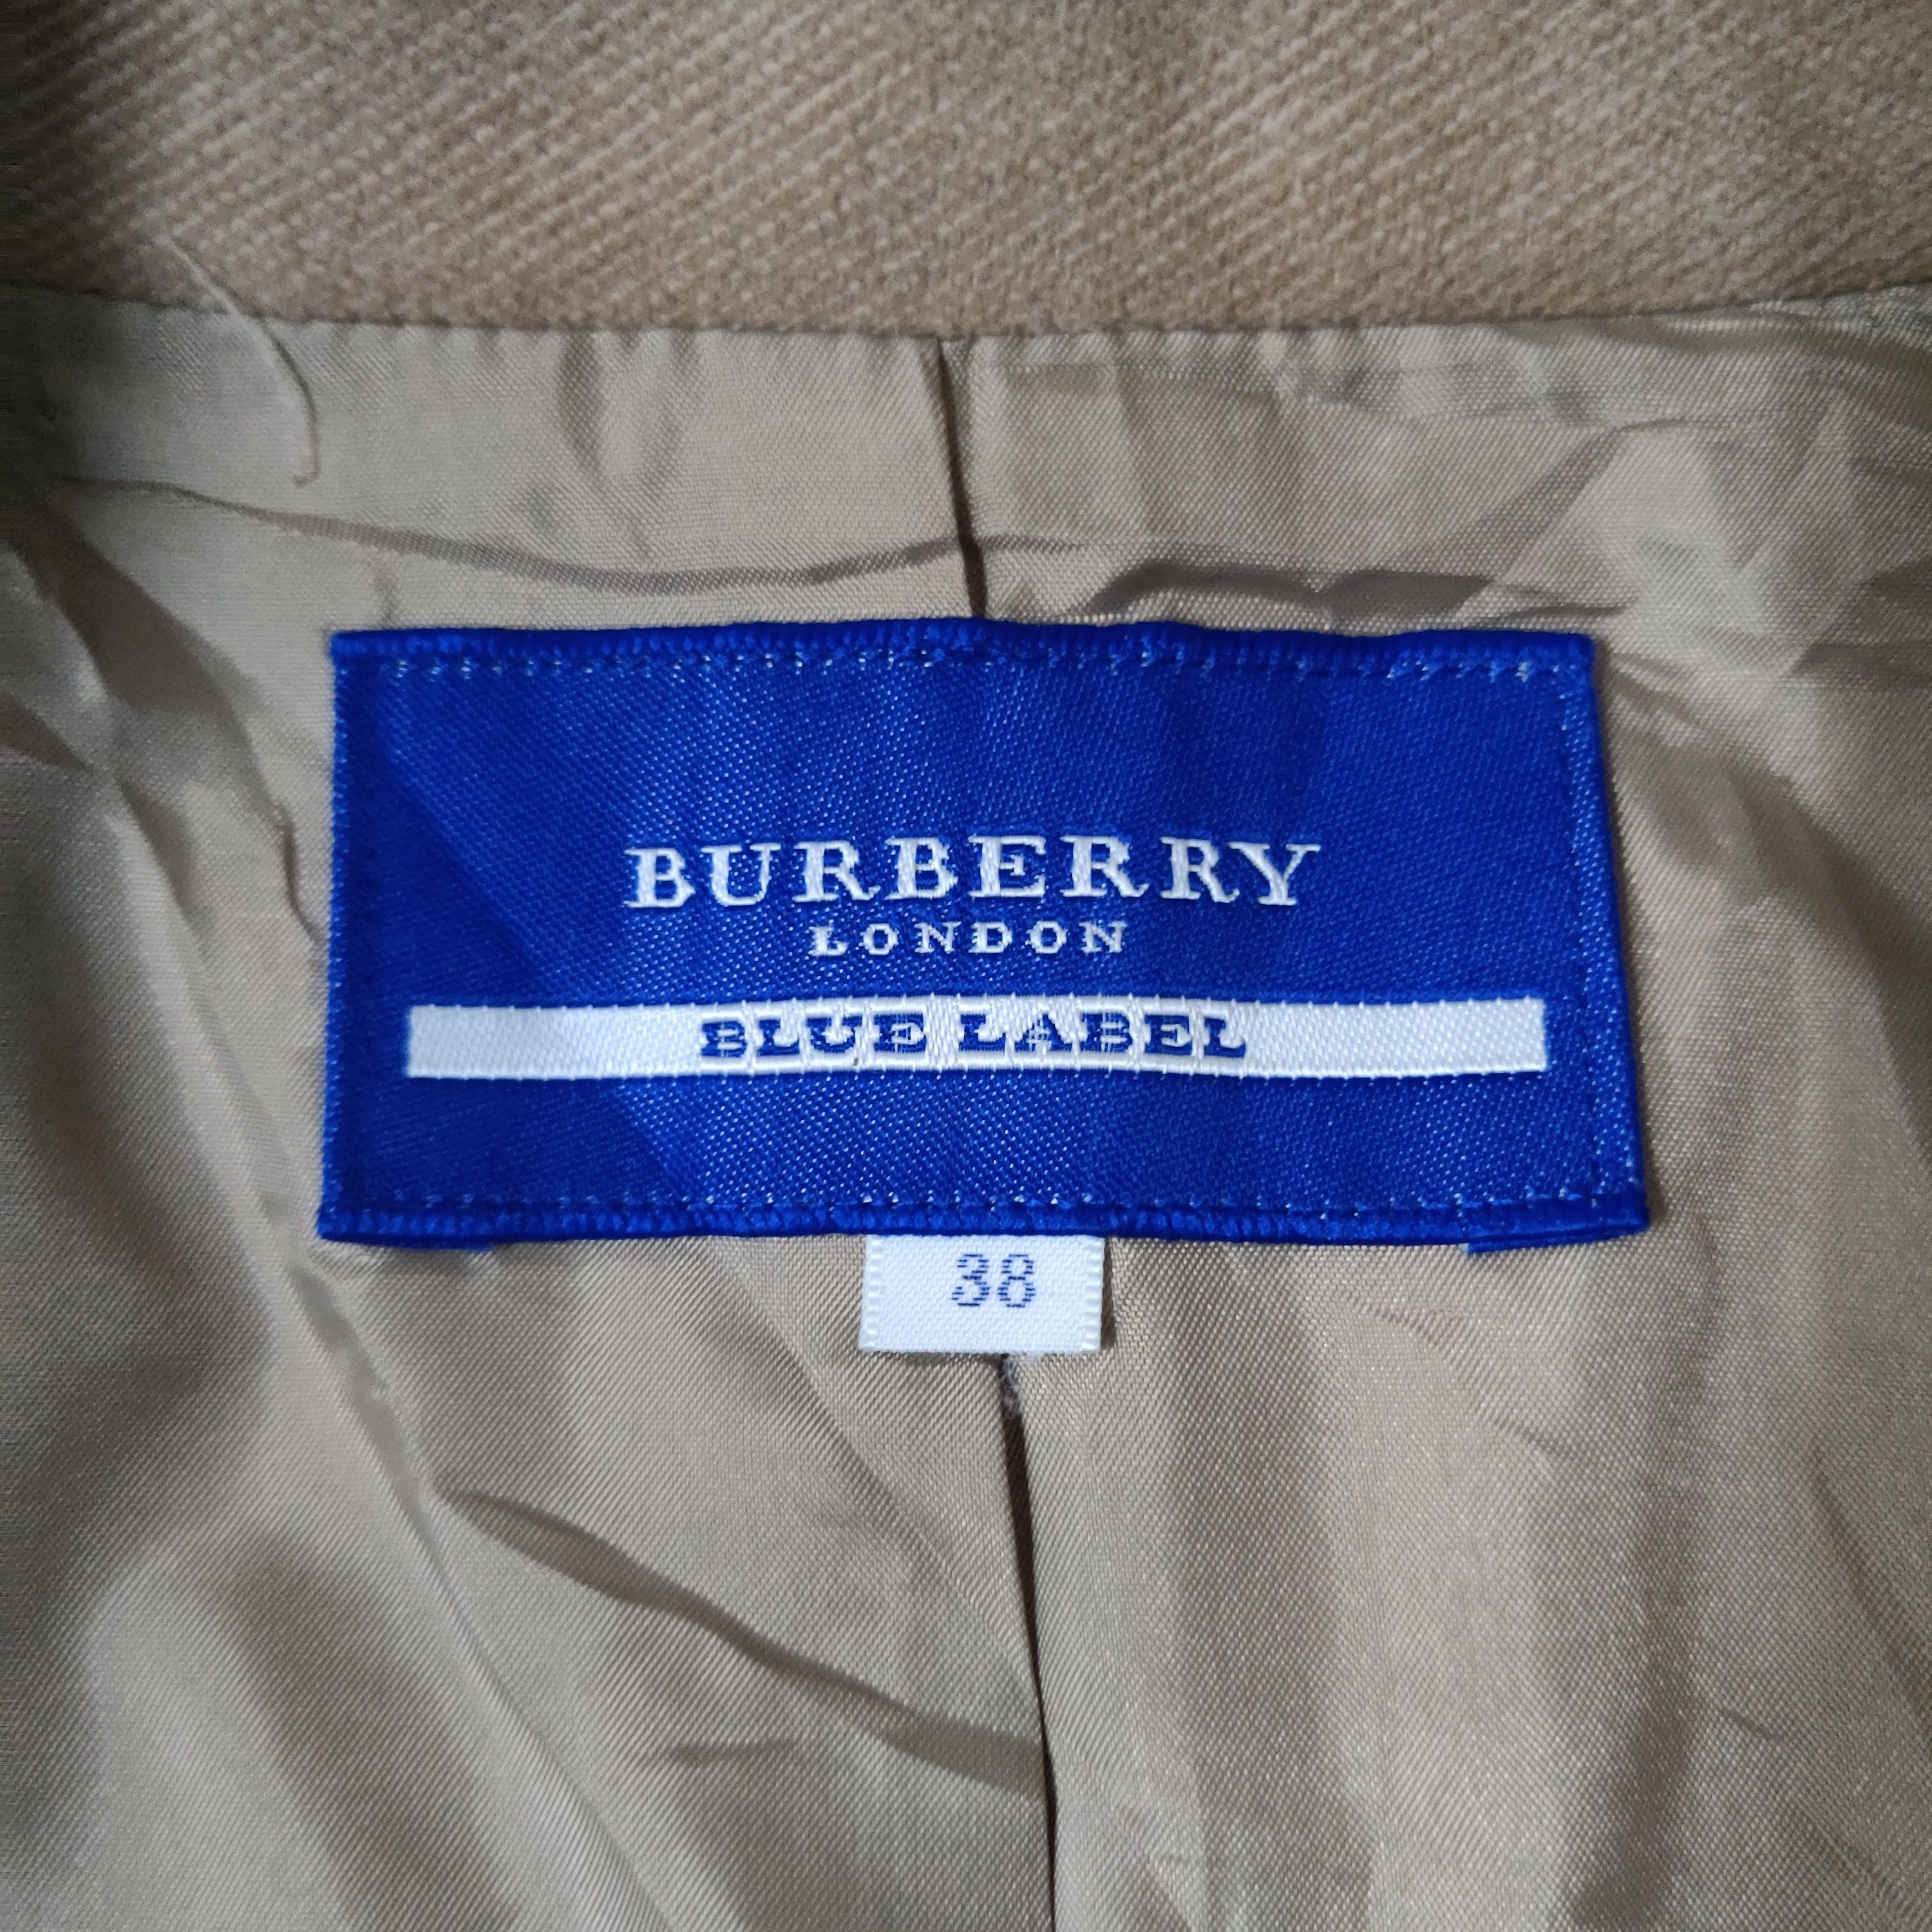 Burberry Blue Label Women's Coat Jacket - 6